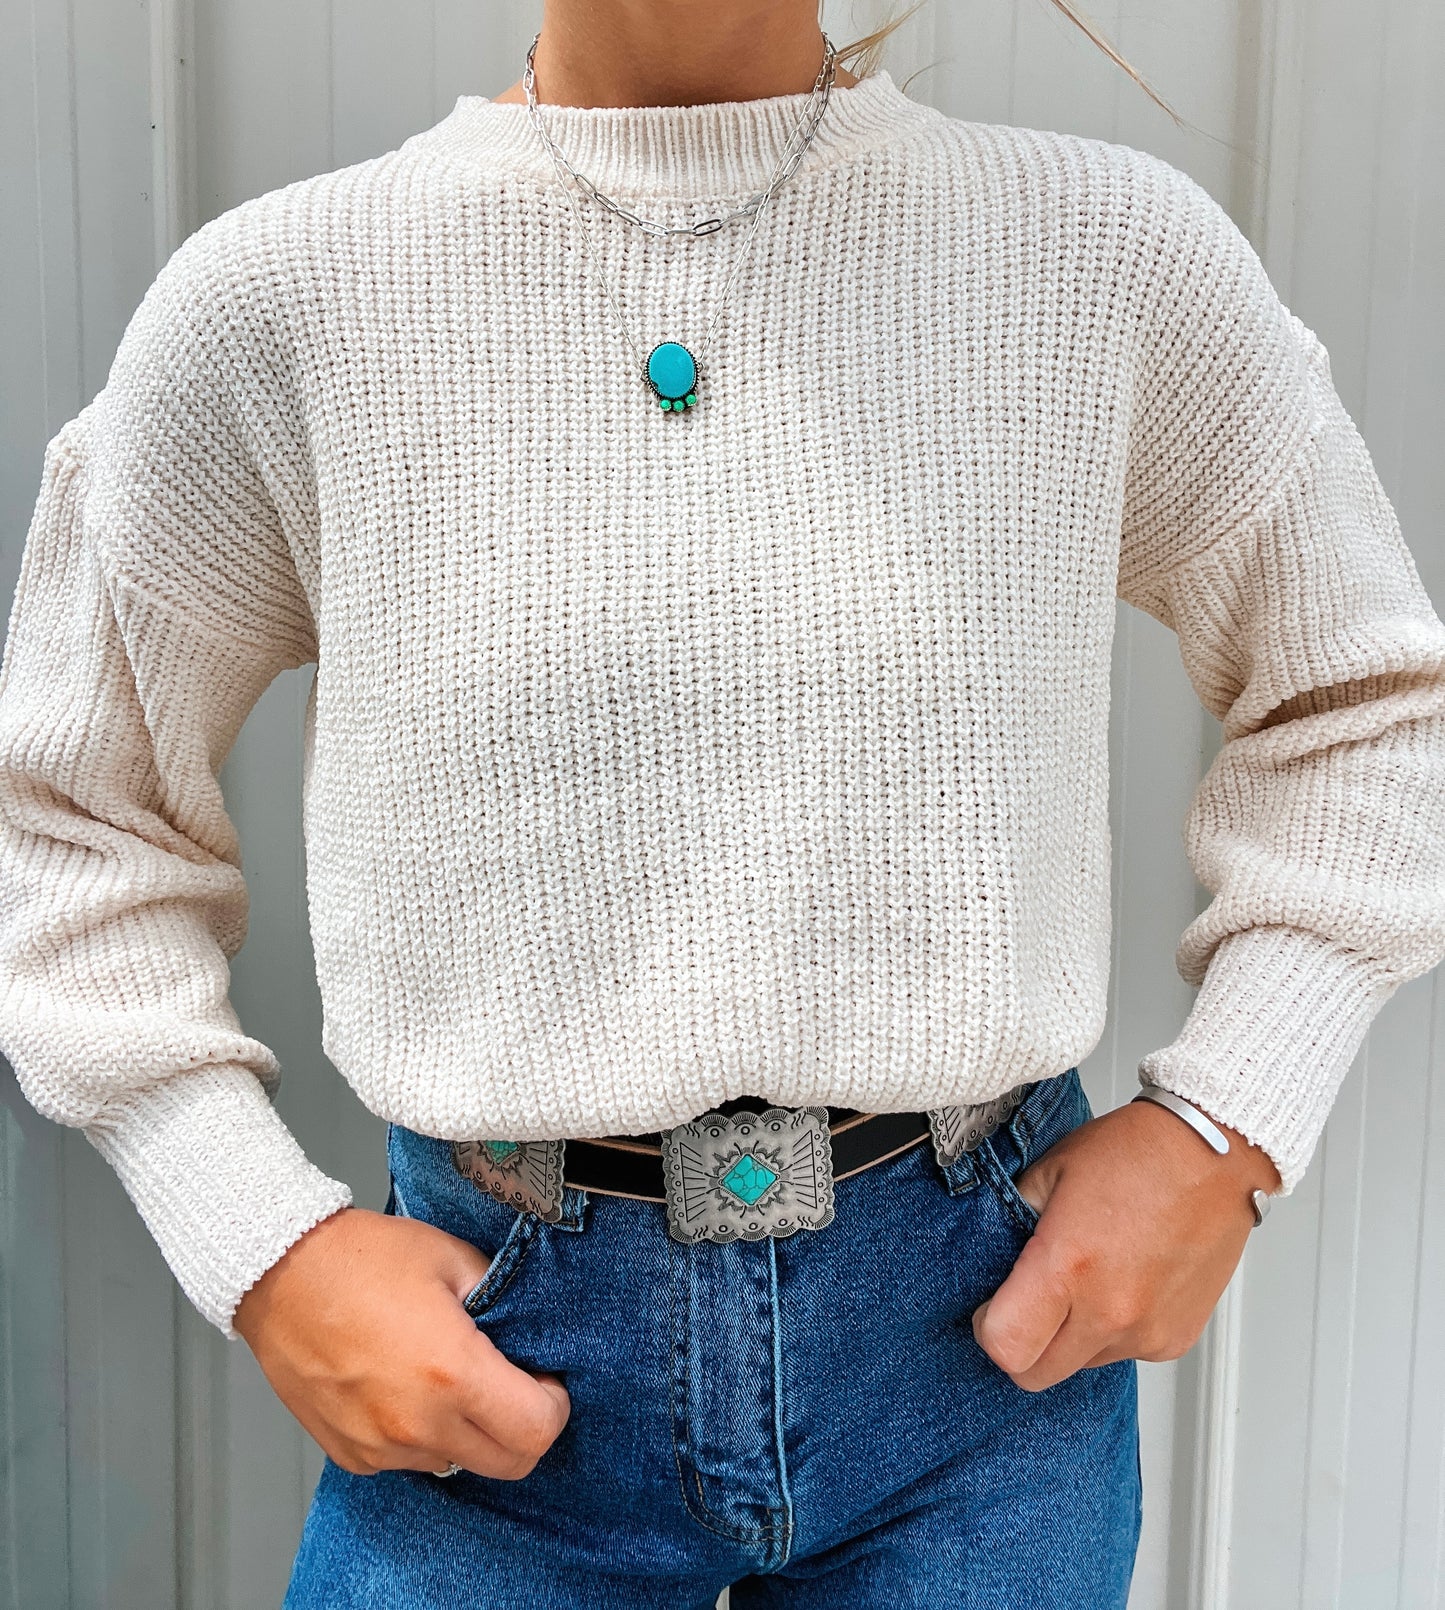 The Savannah Sweater Top